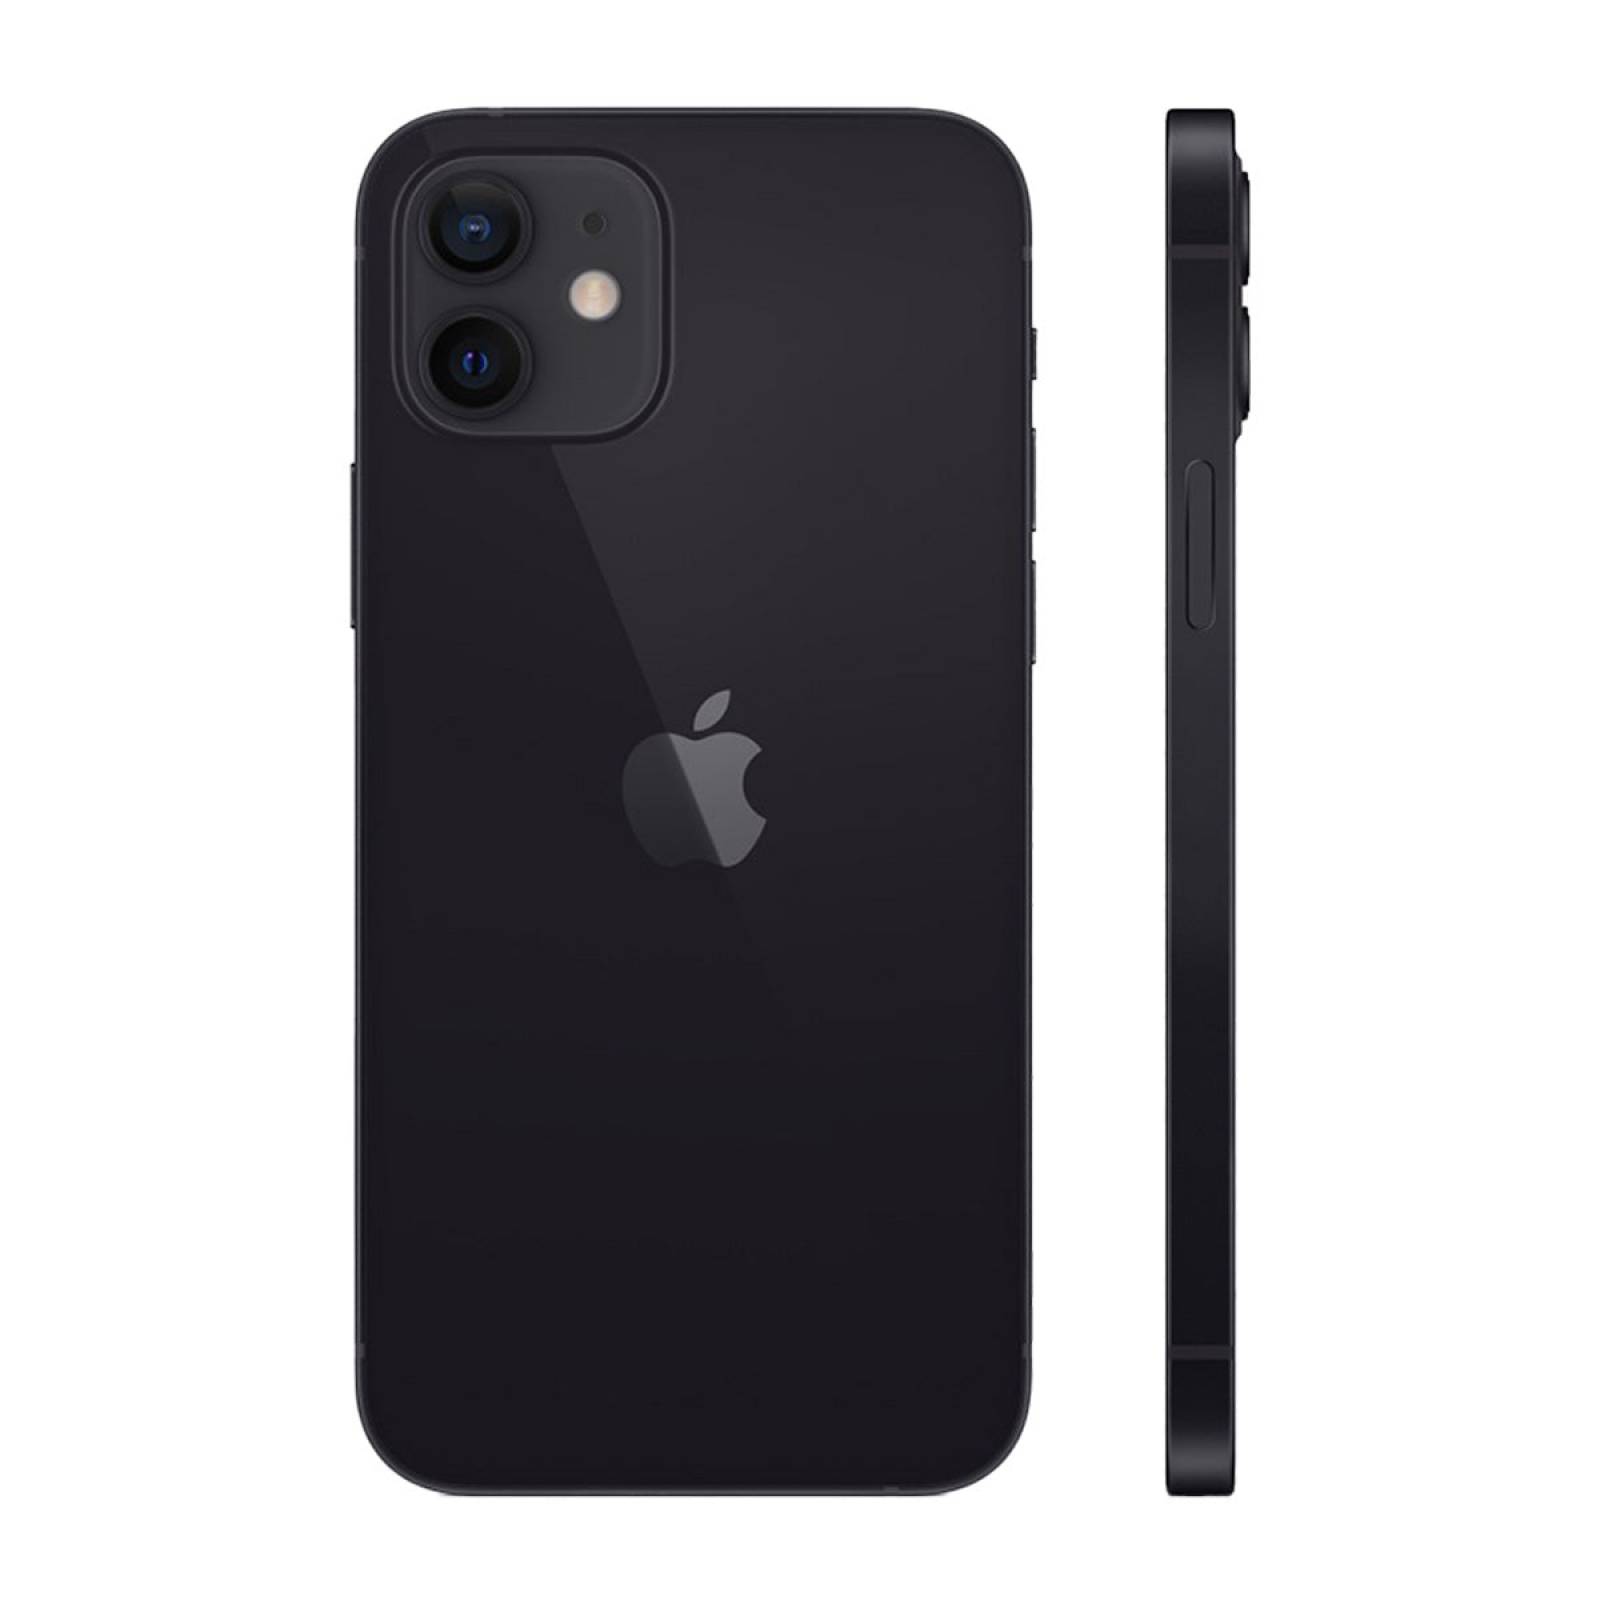 Apple iPhone 12 64GB Negro Reacondicionado Grado A 24 Meses de